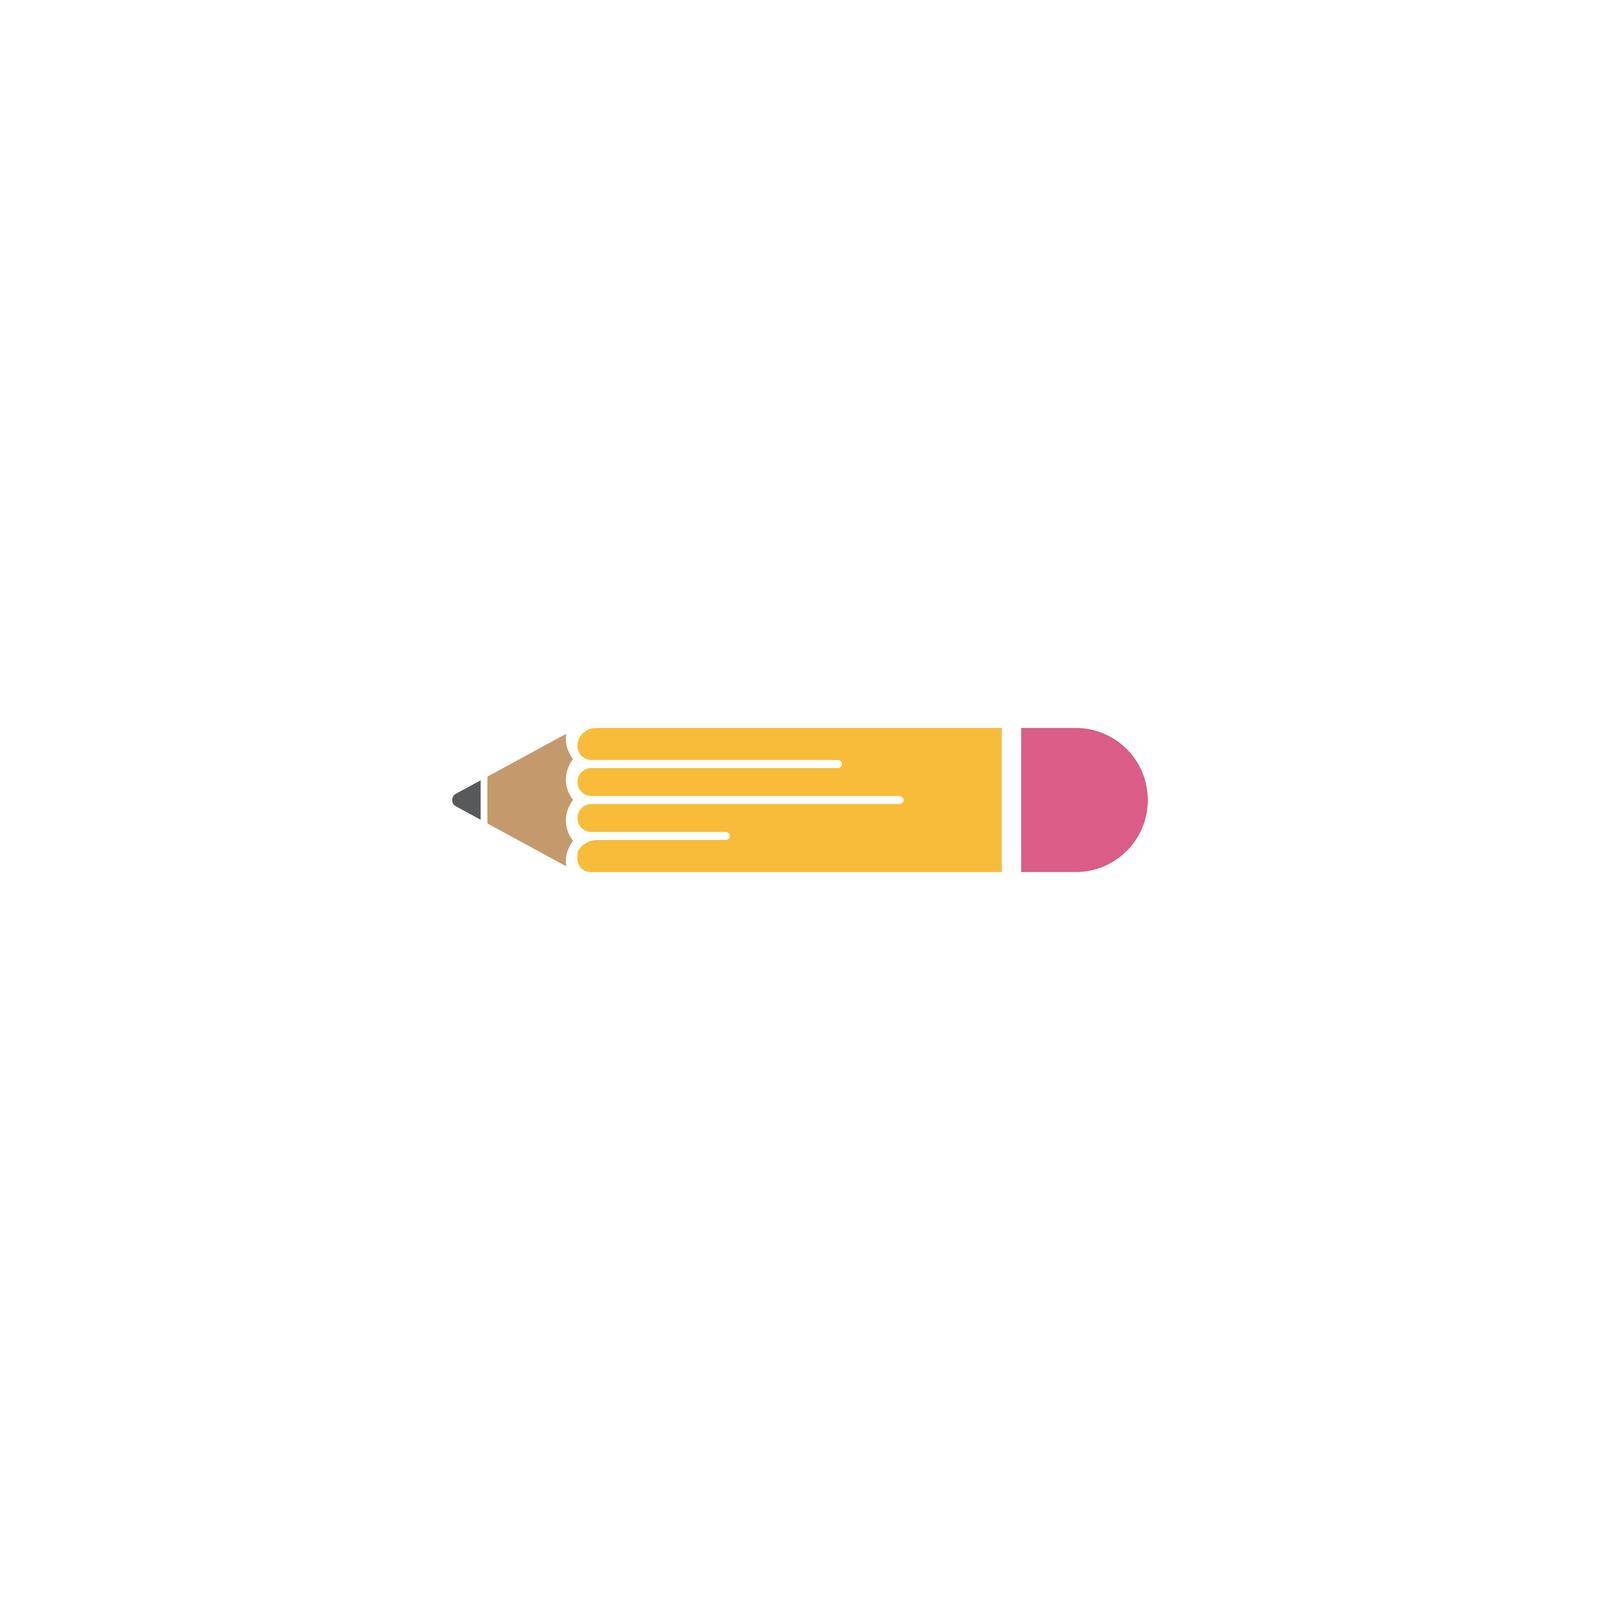 Pencil illustration logo vector design